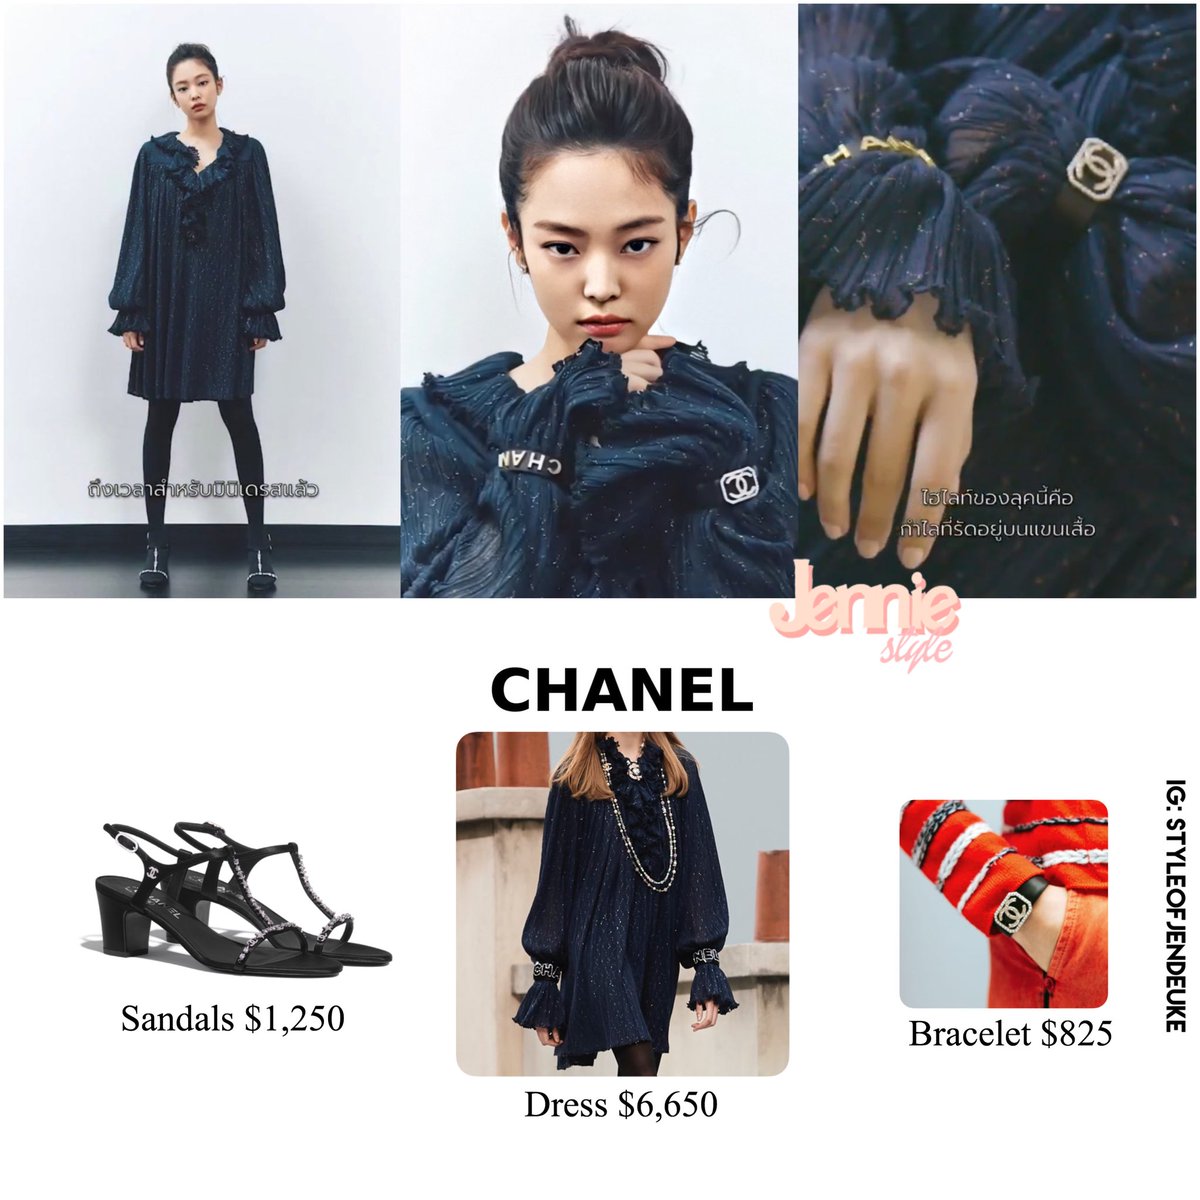 BST outfit Chanel của Jennie Blackpink khi tham dự Paris Fashion Week